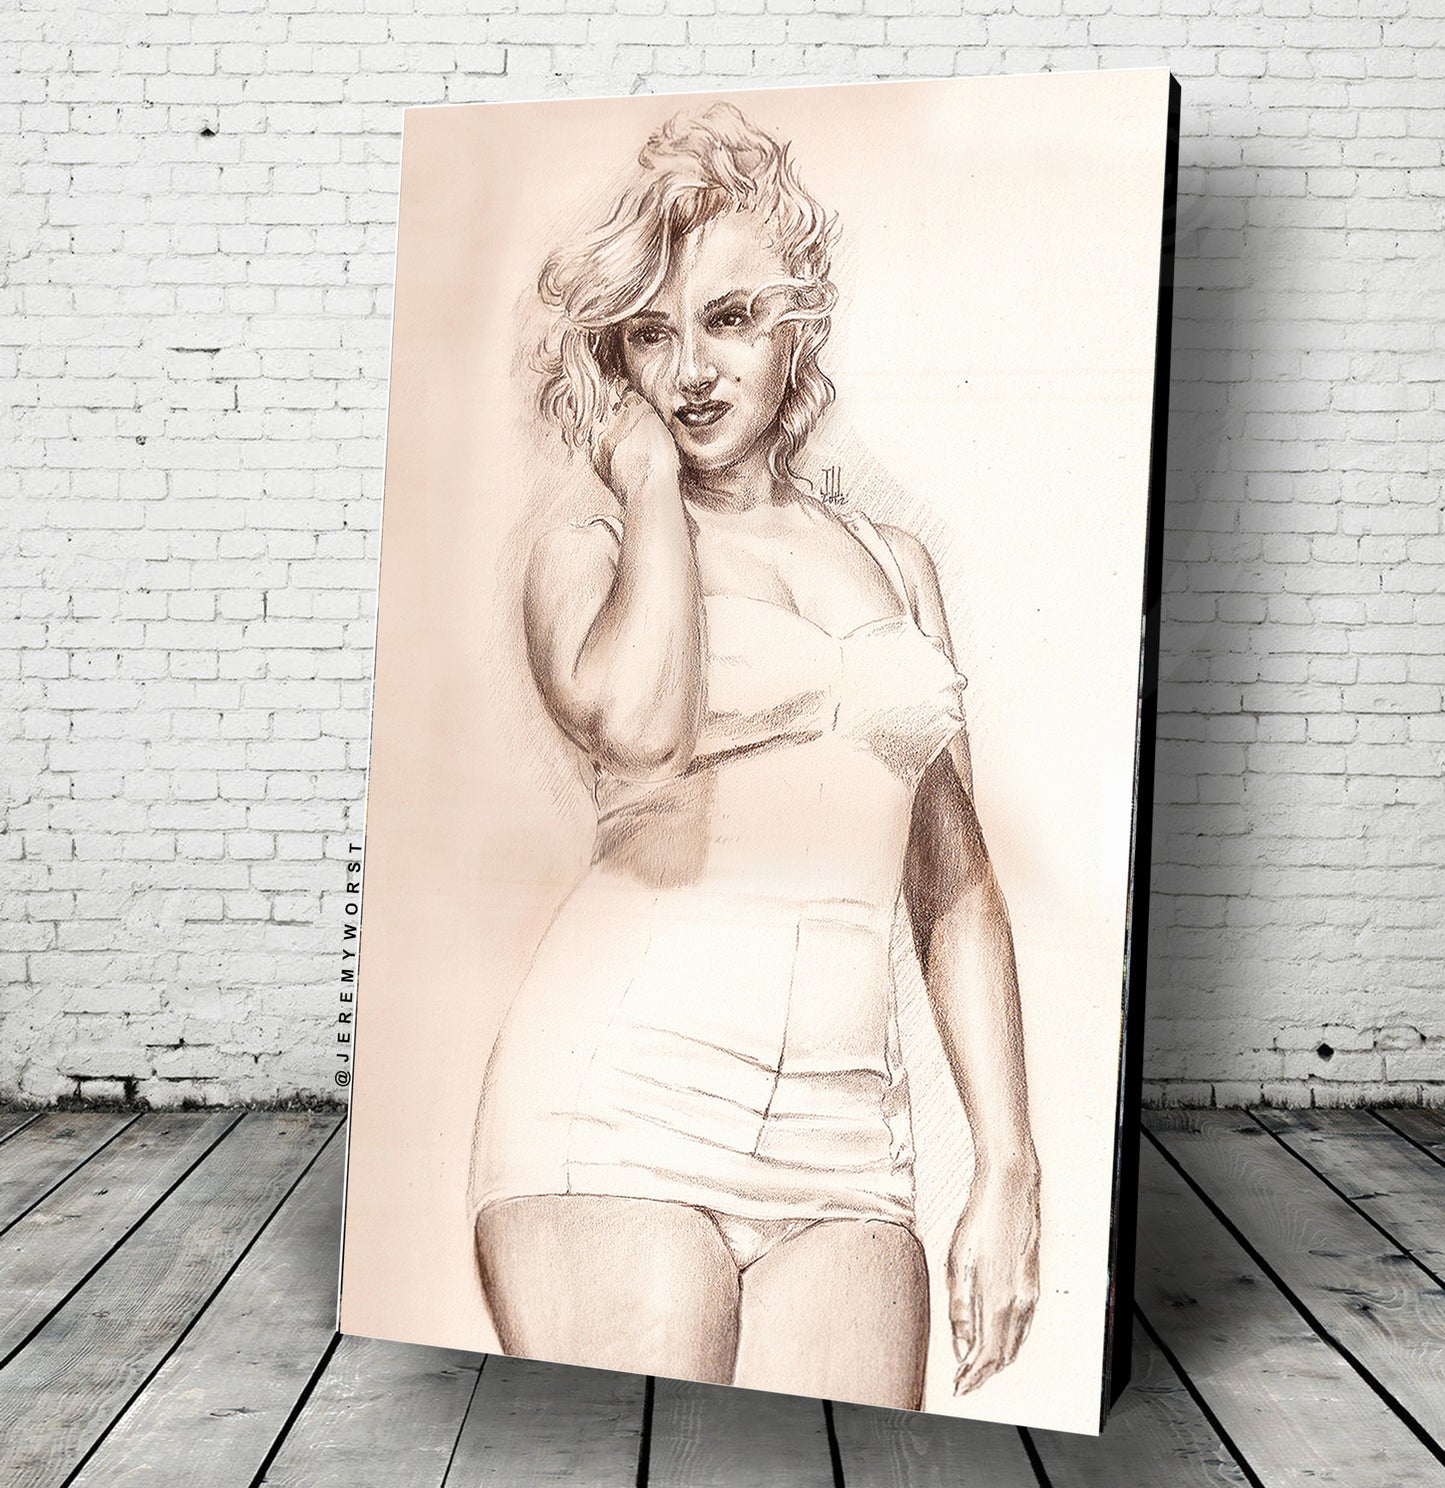 JEREMY WORST Marilyn Monroe Pencil Drawing Sketch Artwork Signed Fine Art Print Great gift for Her 1 sketch